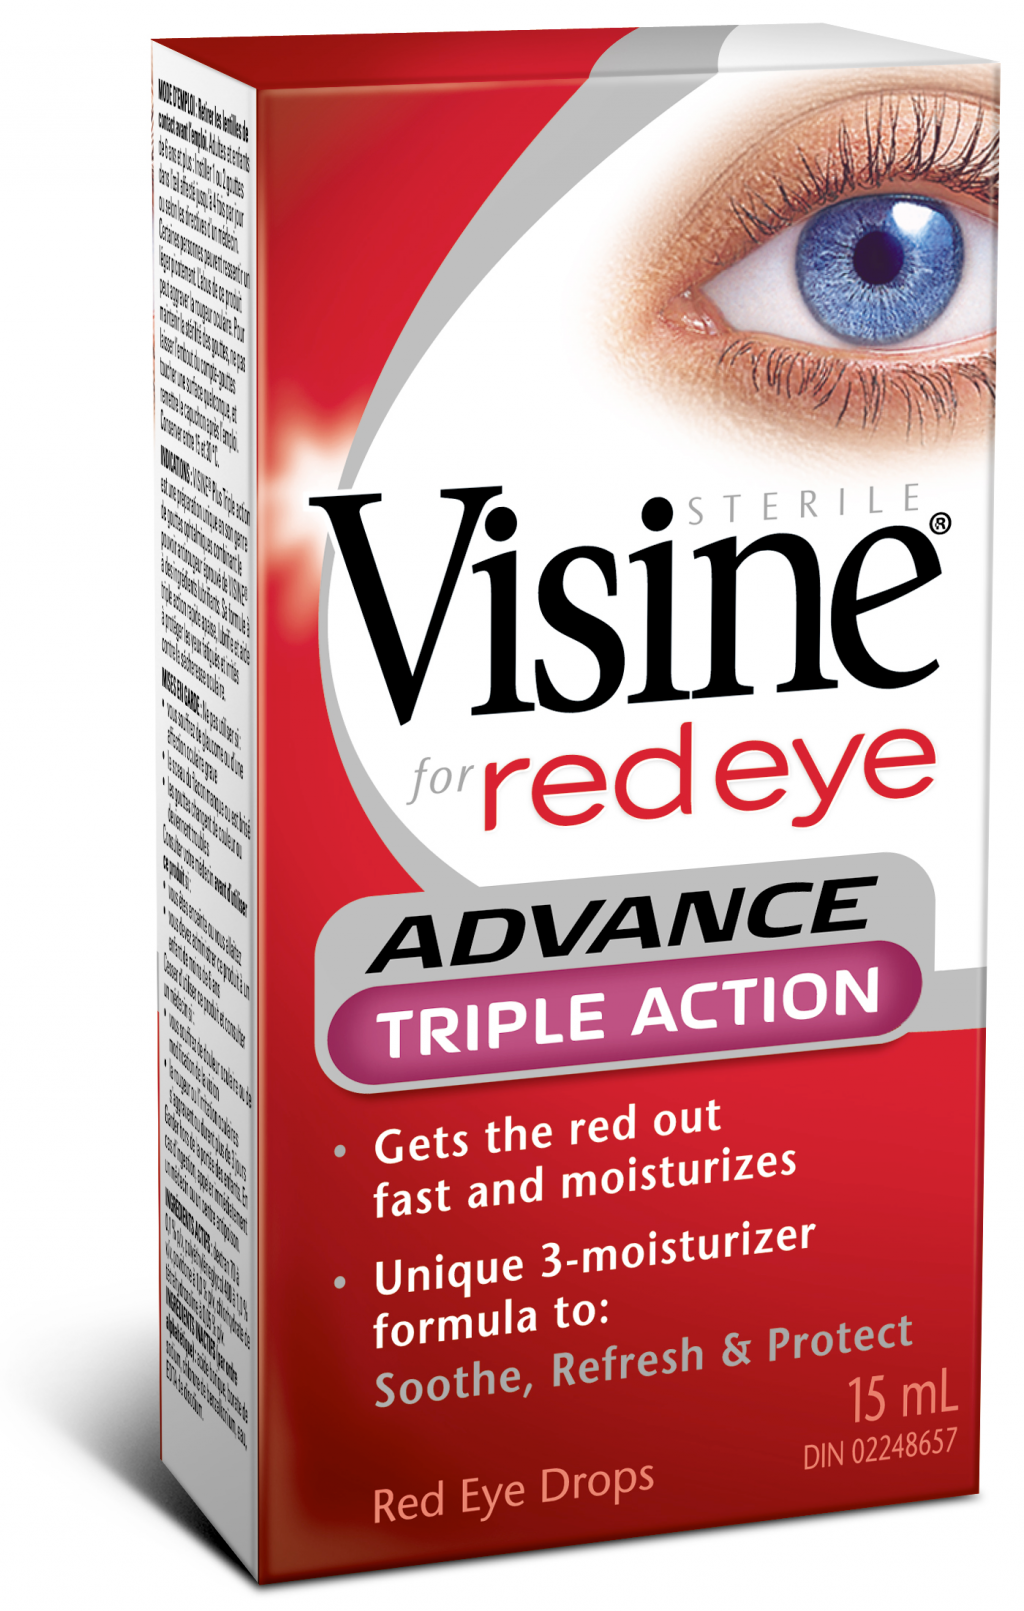 Advance Triple Action Red Eye Drops VISINE®